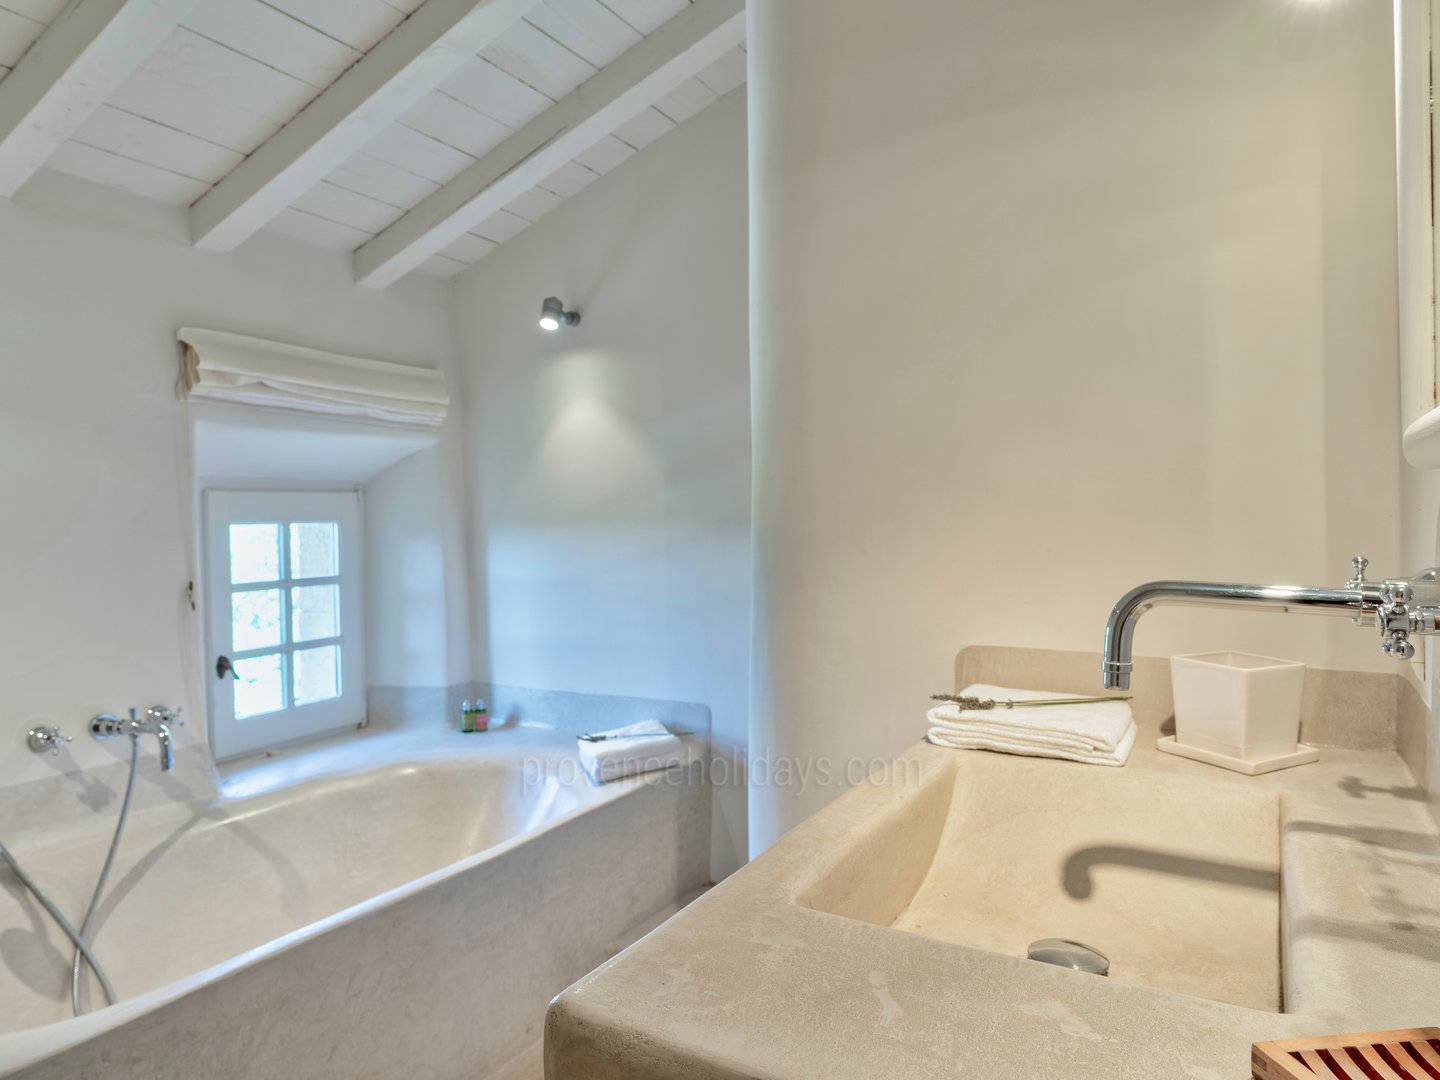 63 - Domaine de la Sainte Victoire: Villa: Bathroom